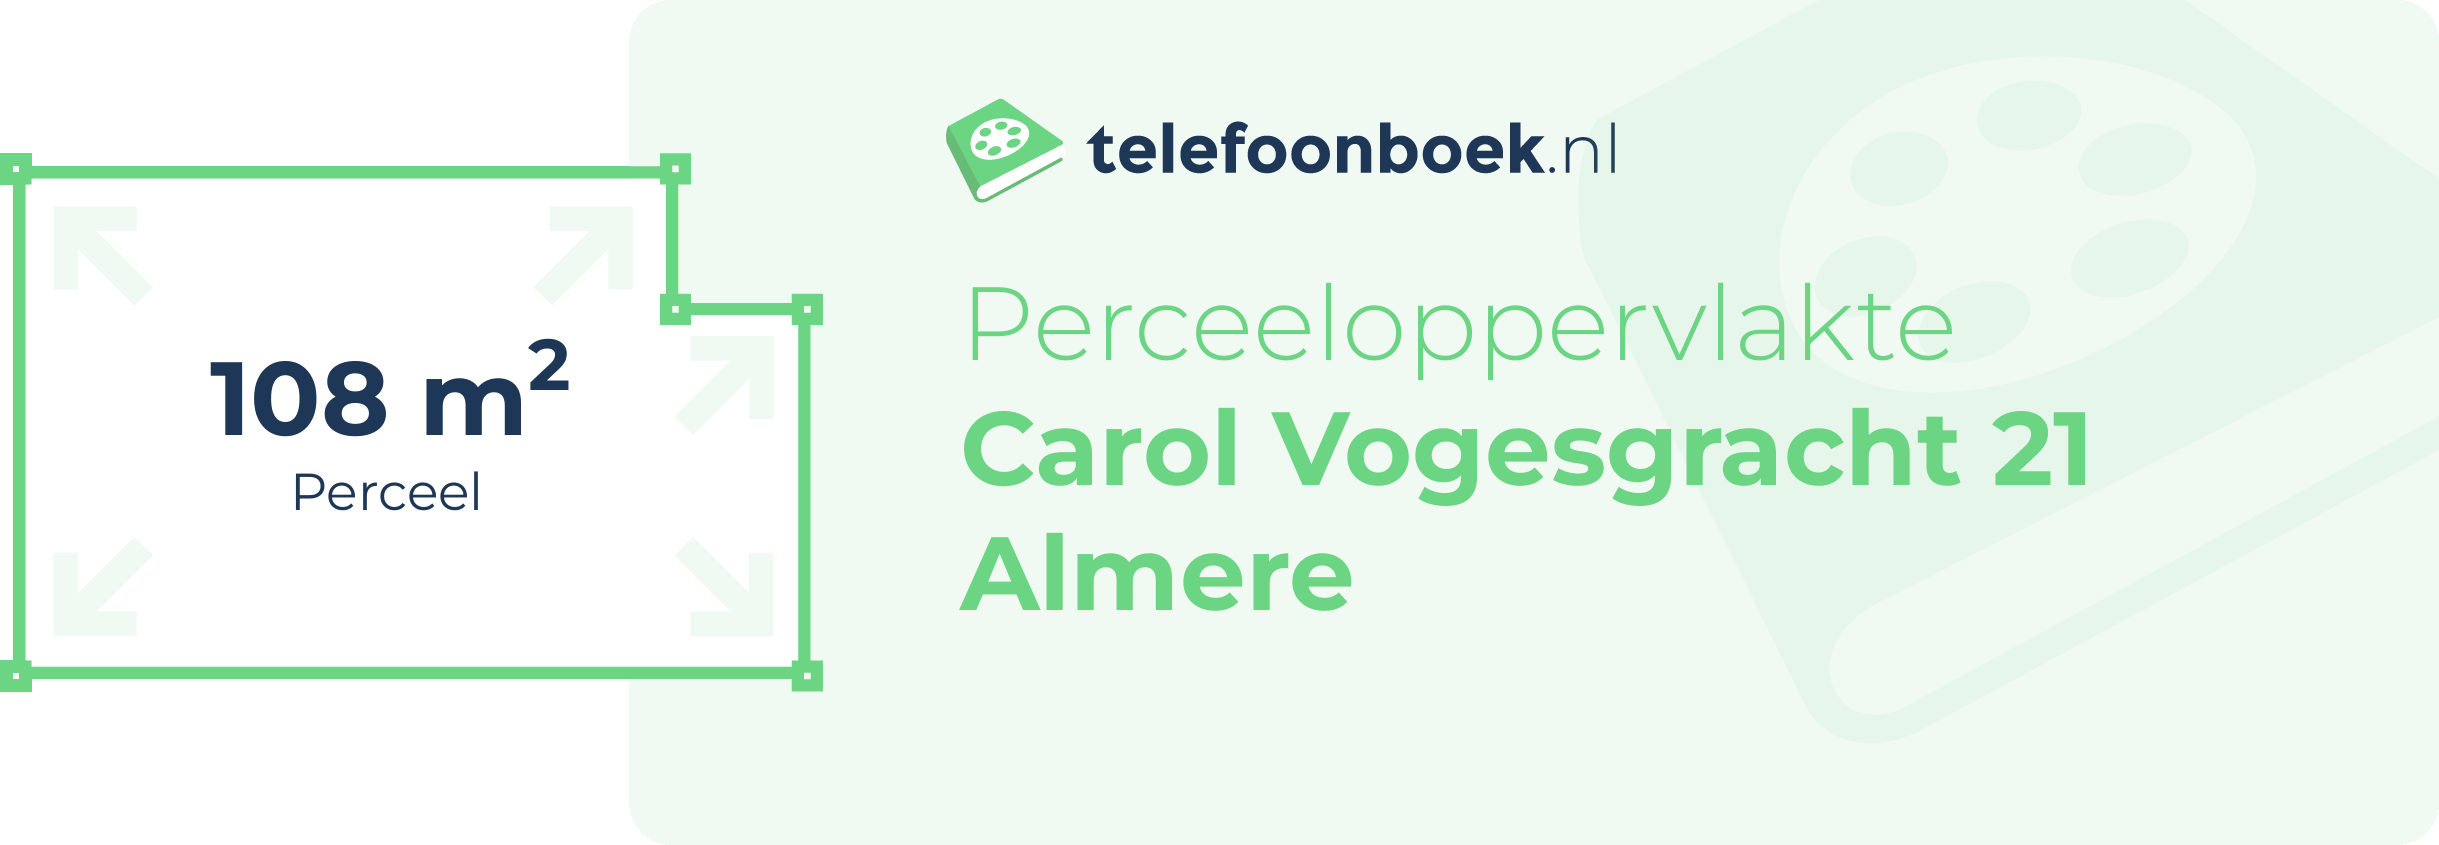 Perceeloppervlakte Carol Vogesgracht 21 Almere